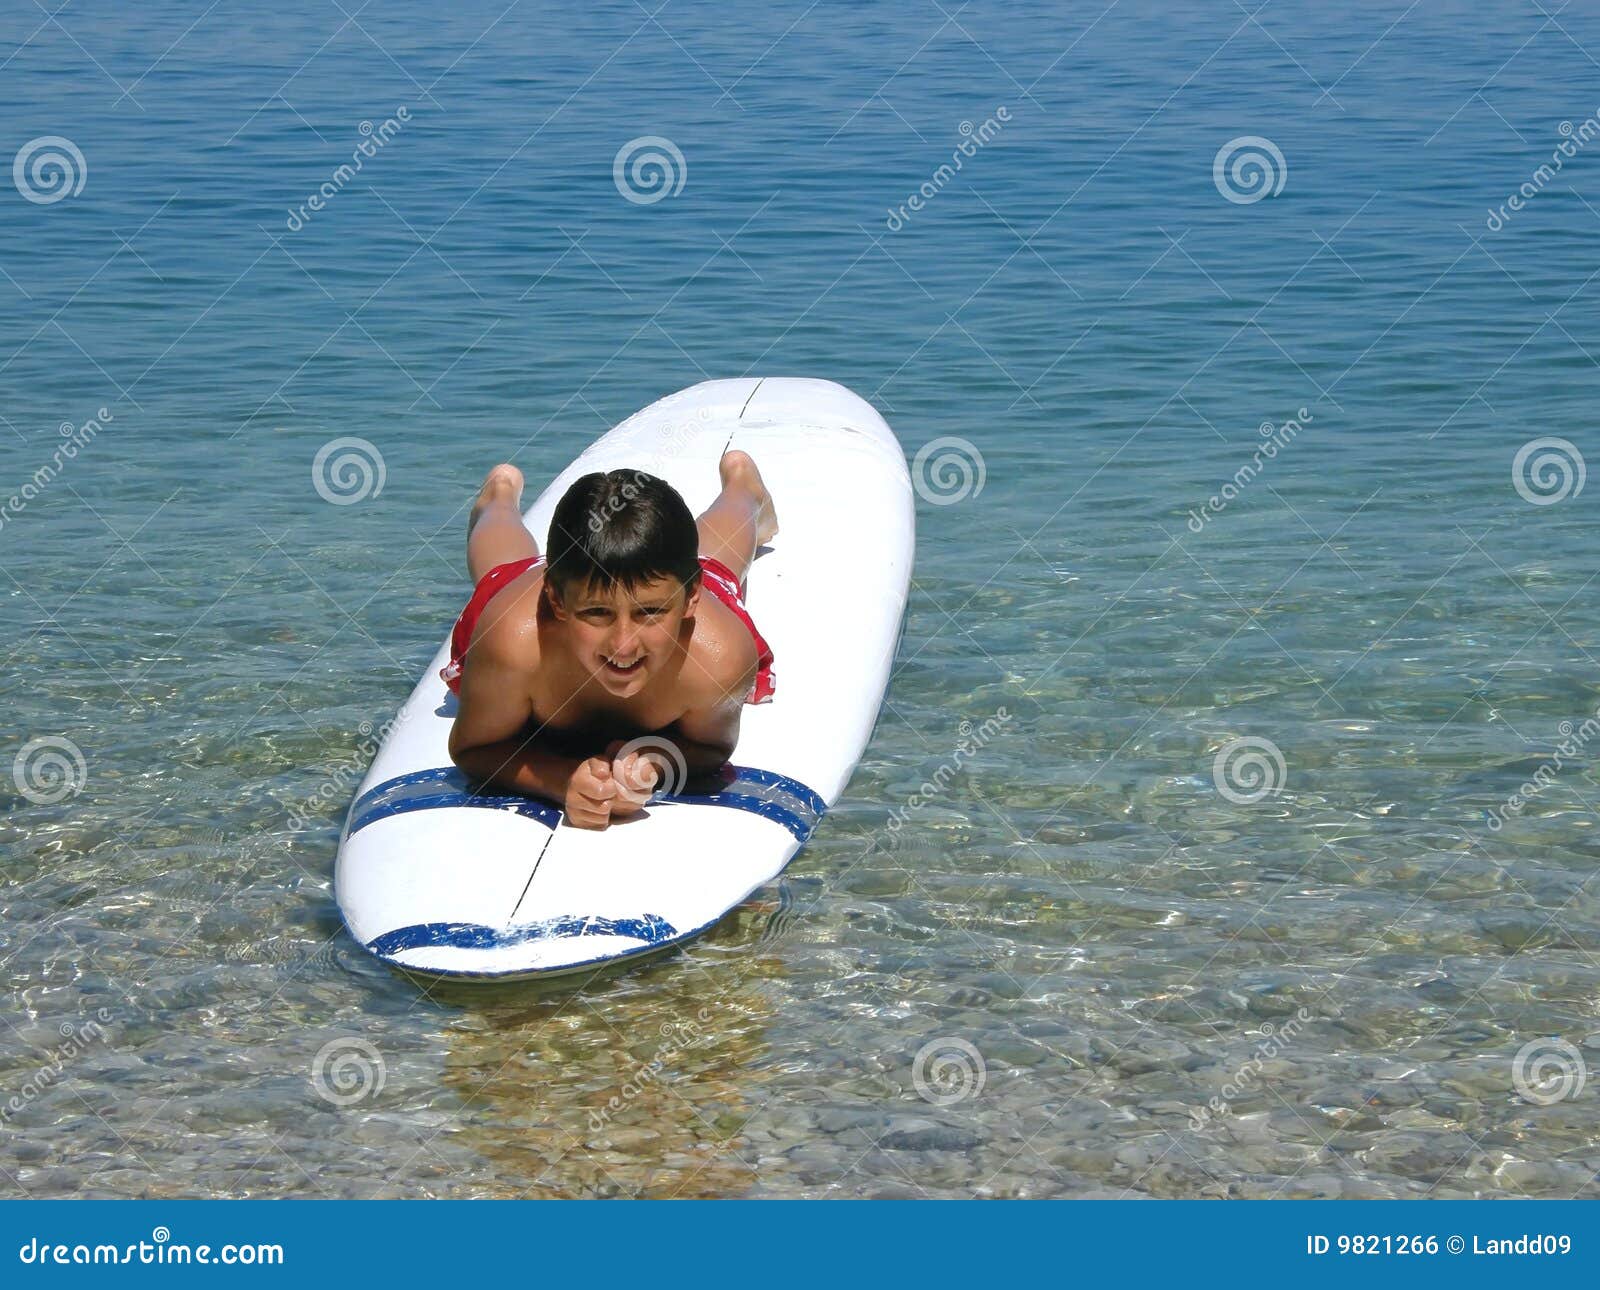 boy lying on surfs in beach